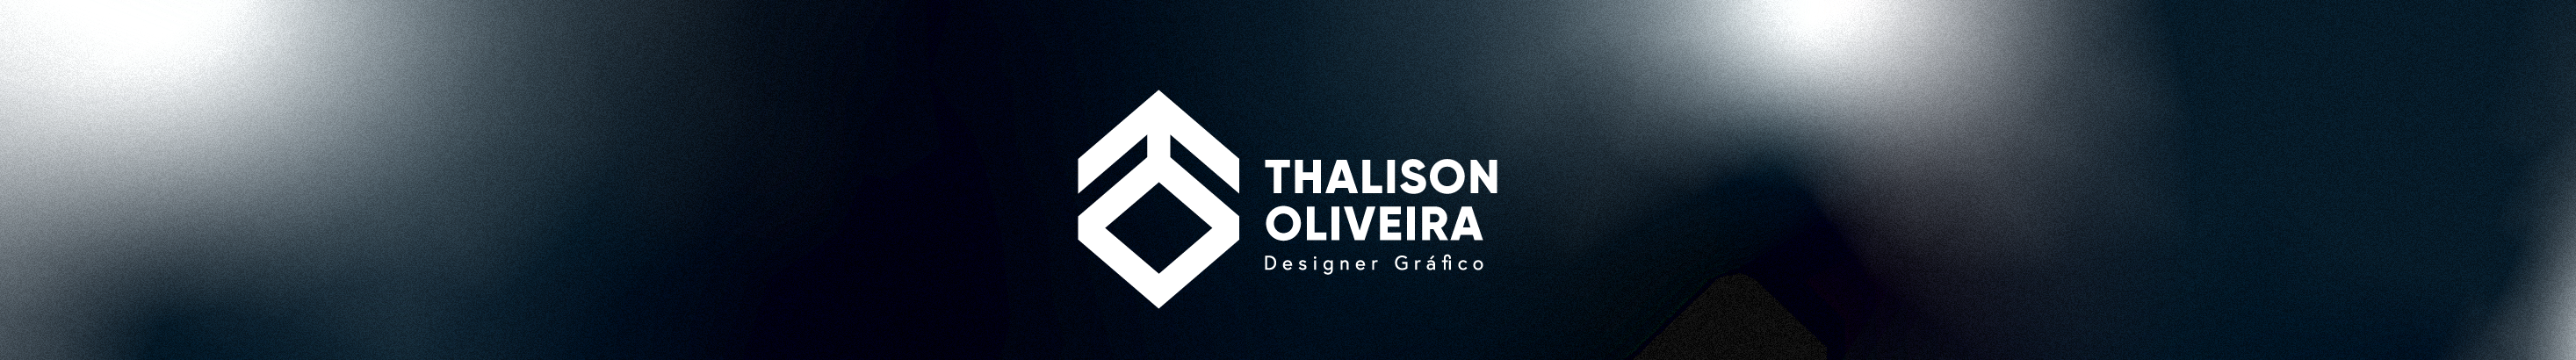 Thalison Oliveiras profilbanner